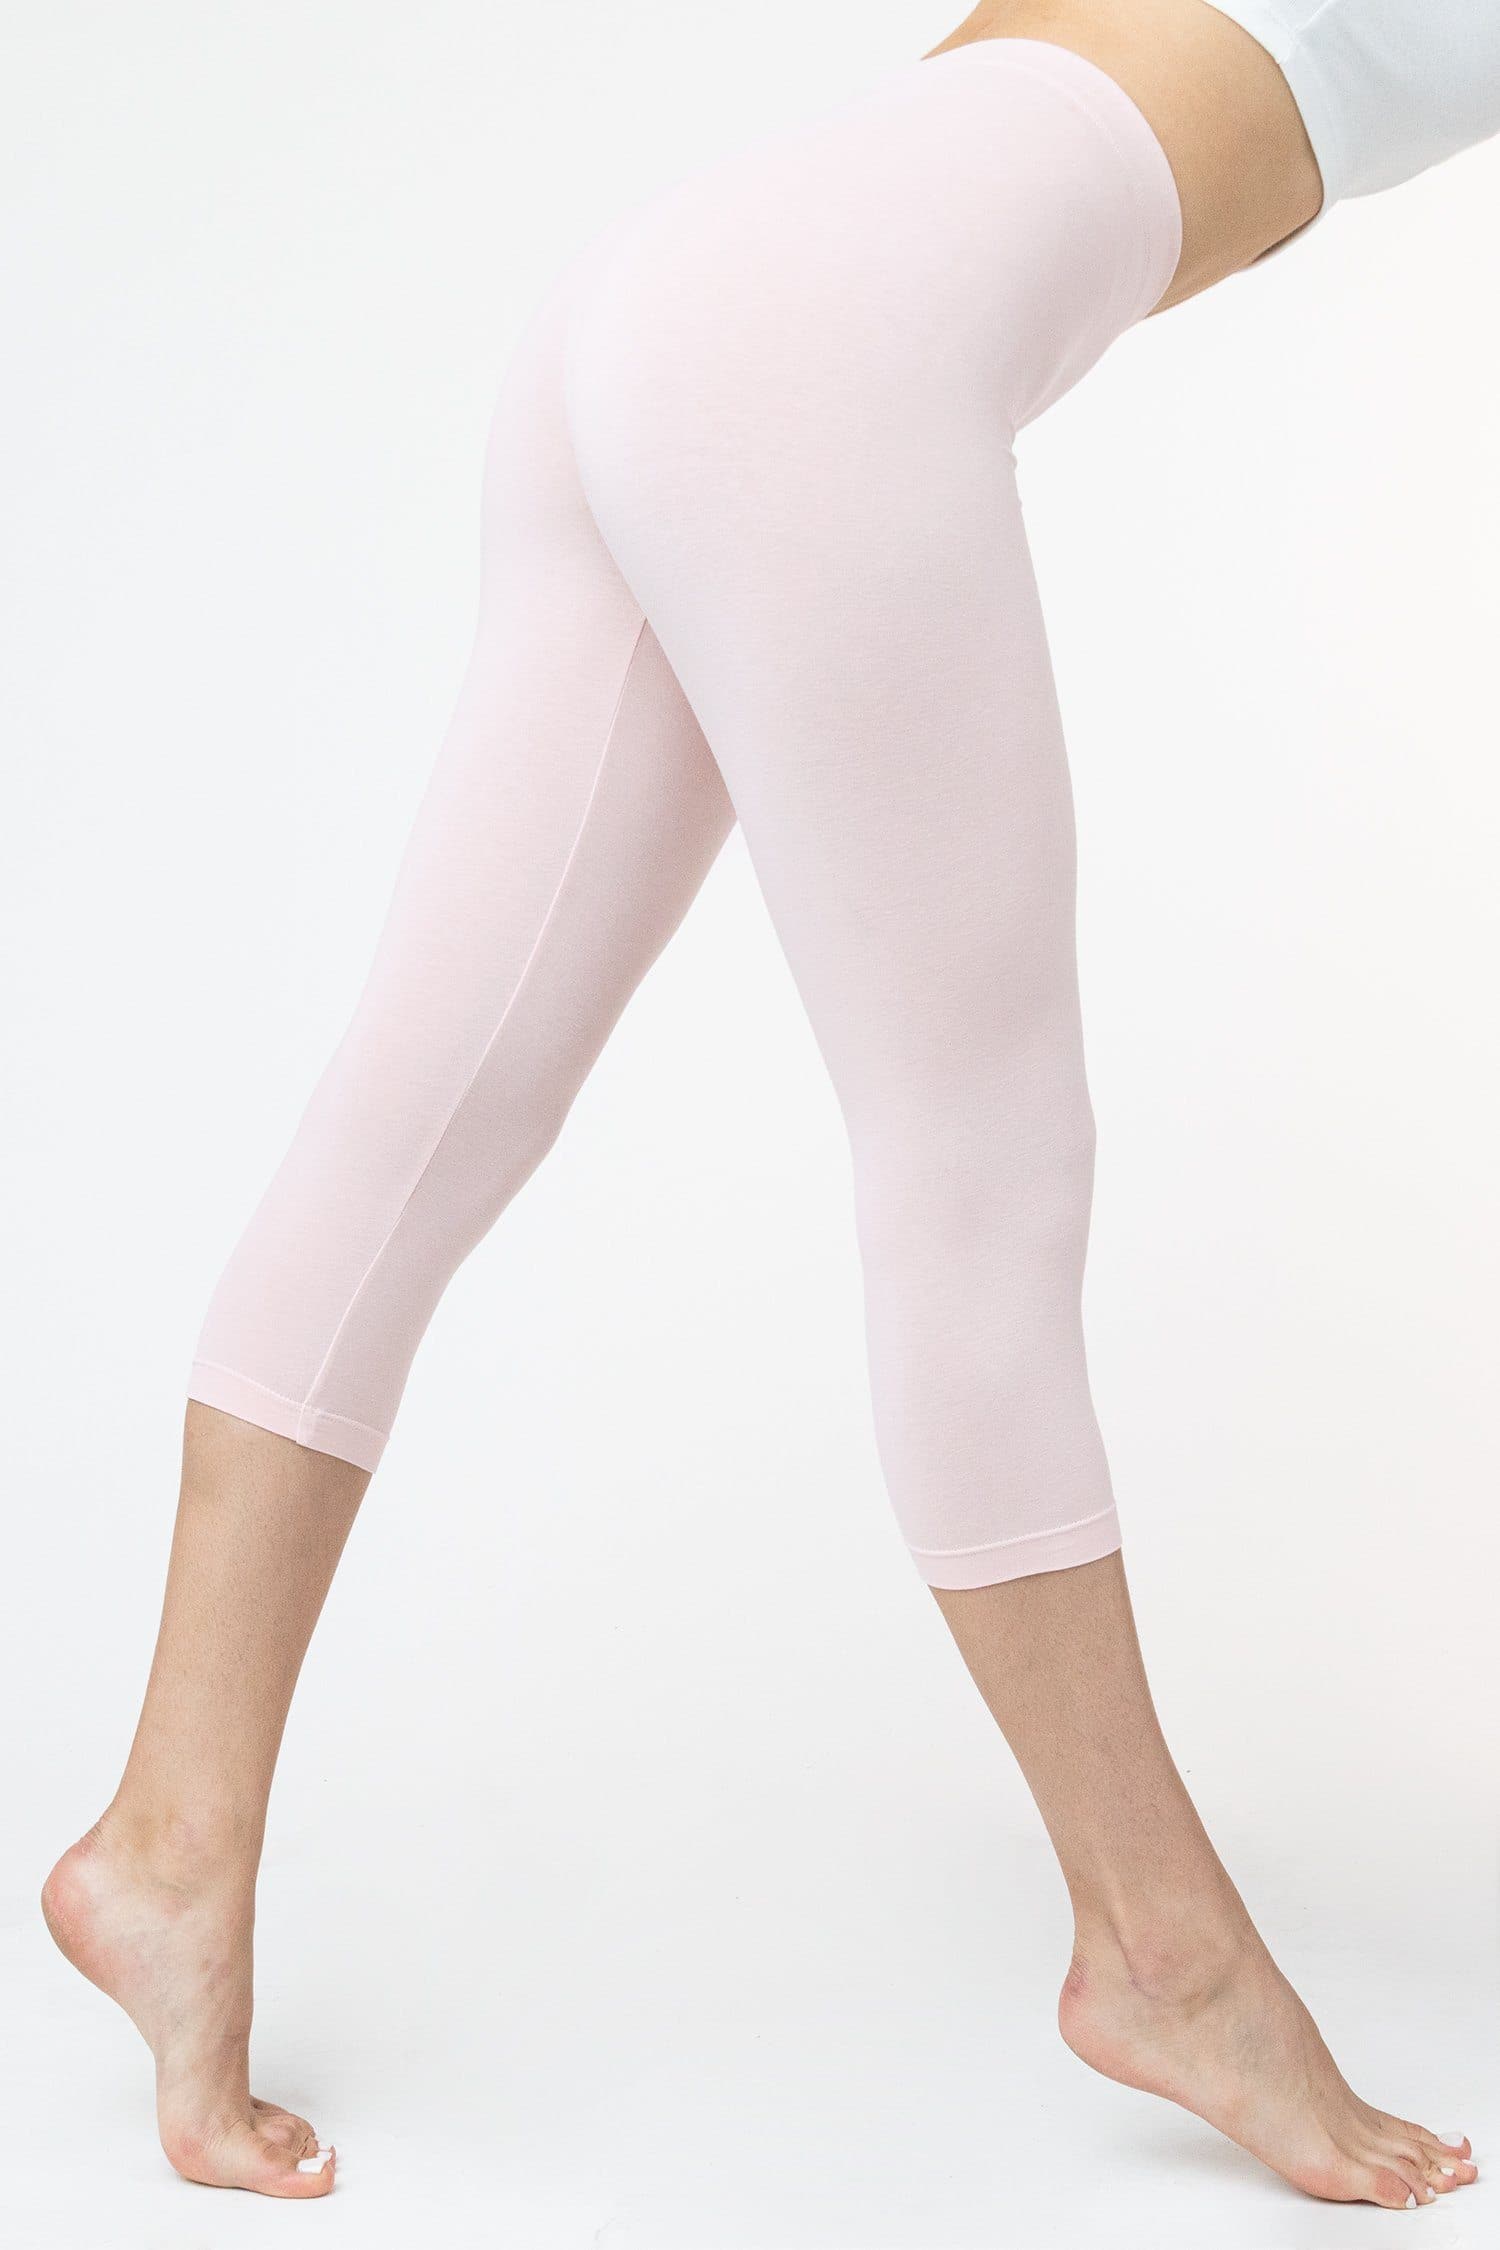 Gaiam Om-Dri Elsie Print Capri Legging Pants-Bright White- Large-New Tag  $48